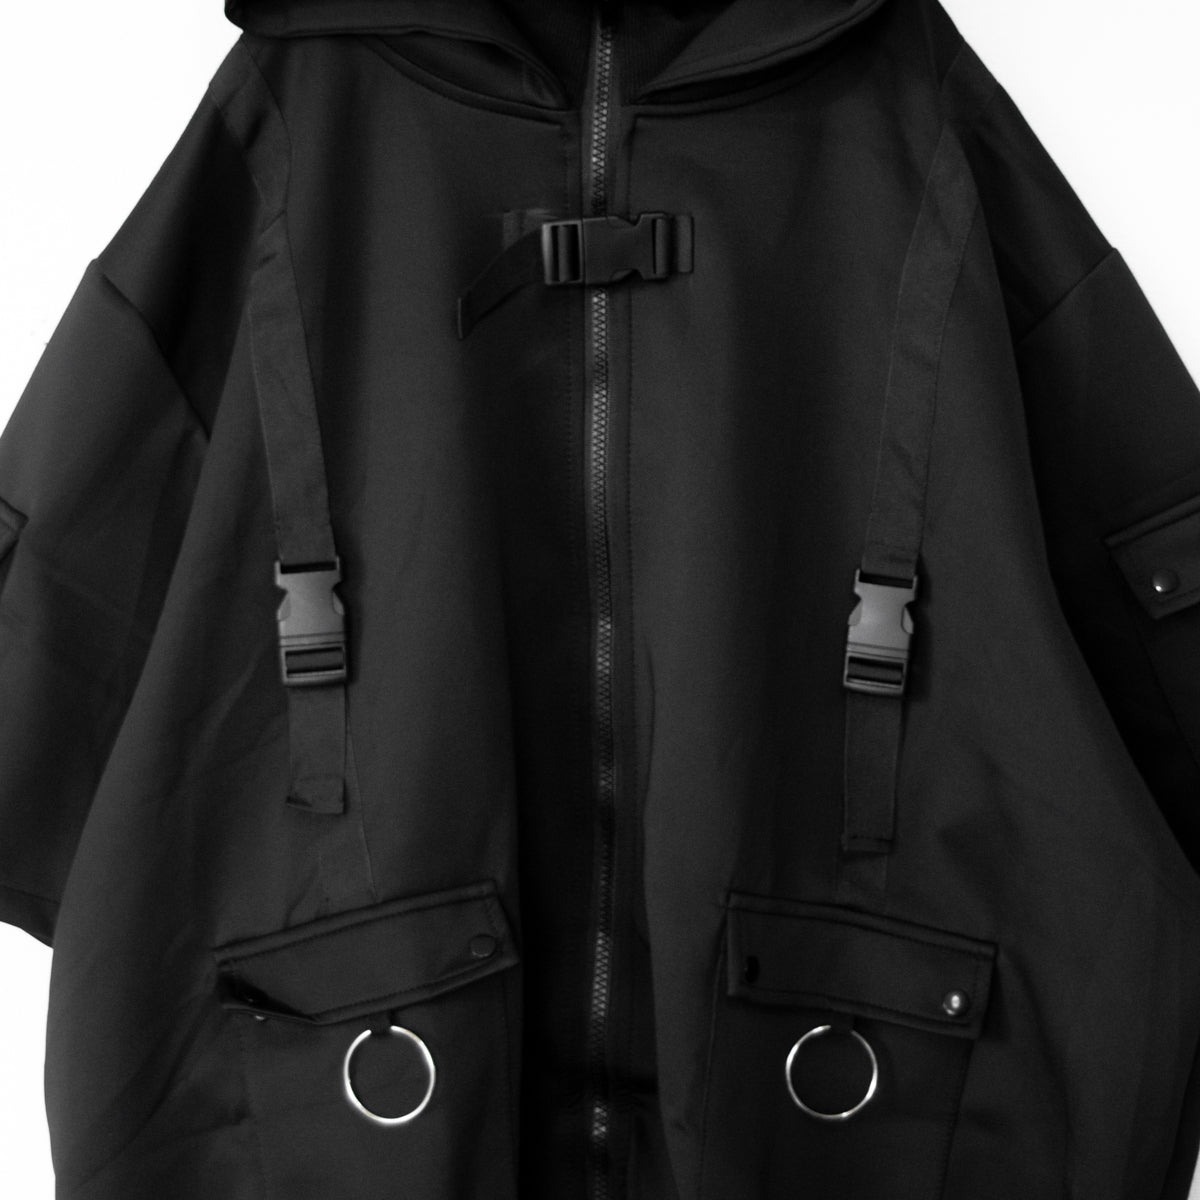 ACDC Rag Cyber __PUNK Modeling Jacket Short Sleeve Ver Black